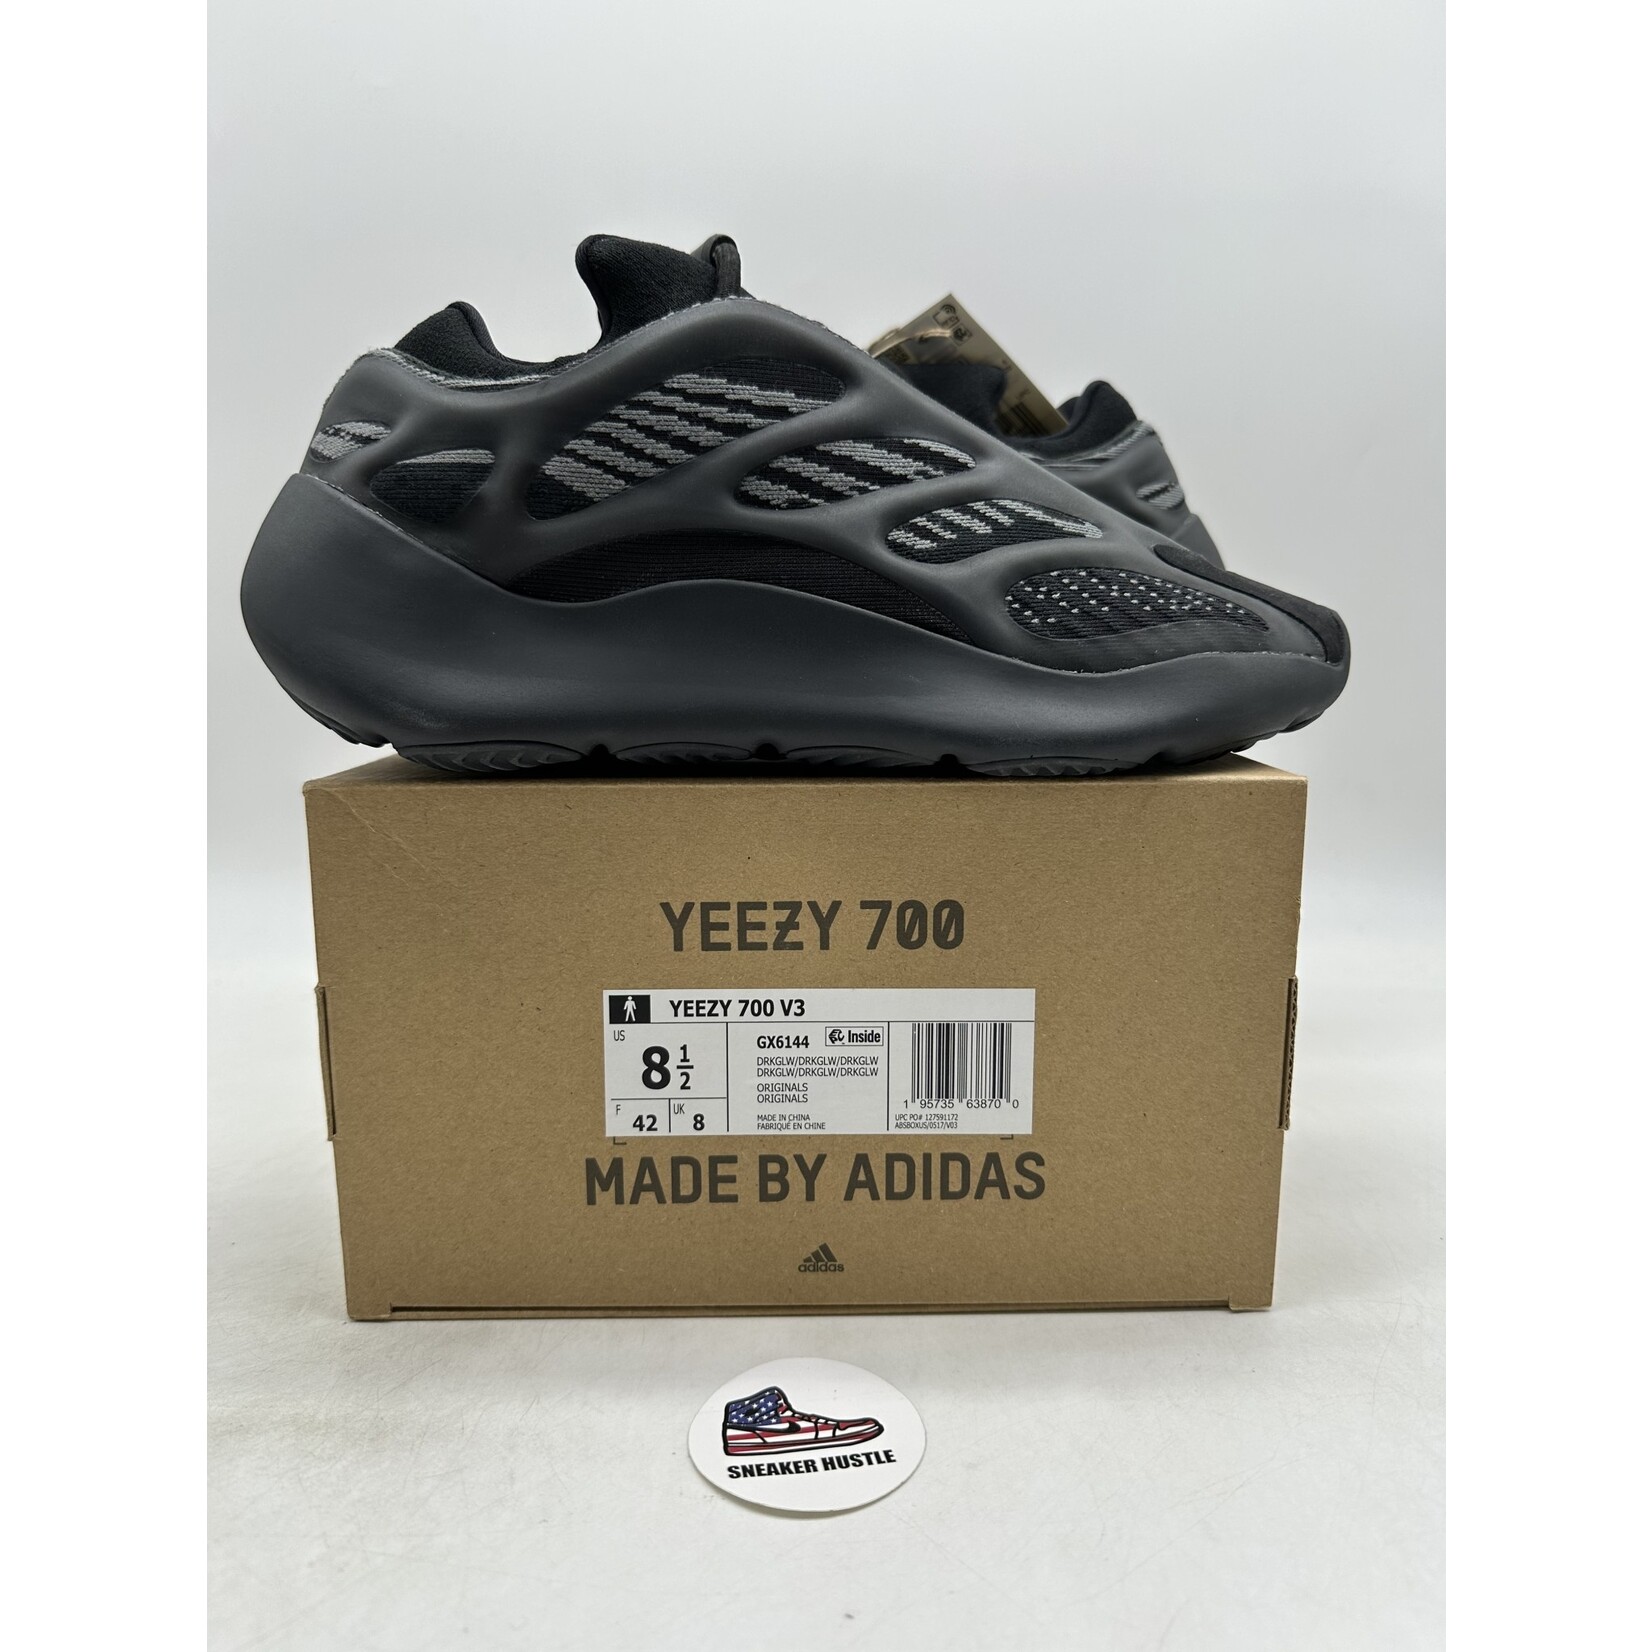 Adidas adidas Yeezy 700 V3 Dark Glow